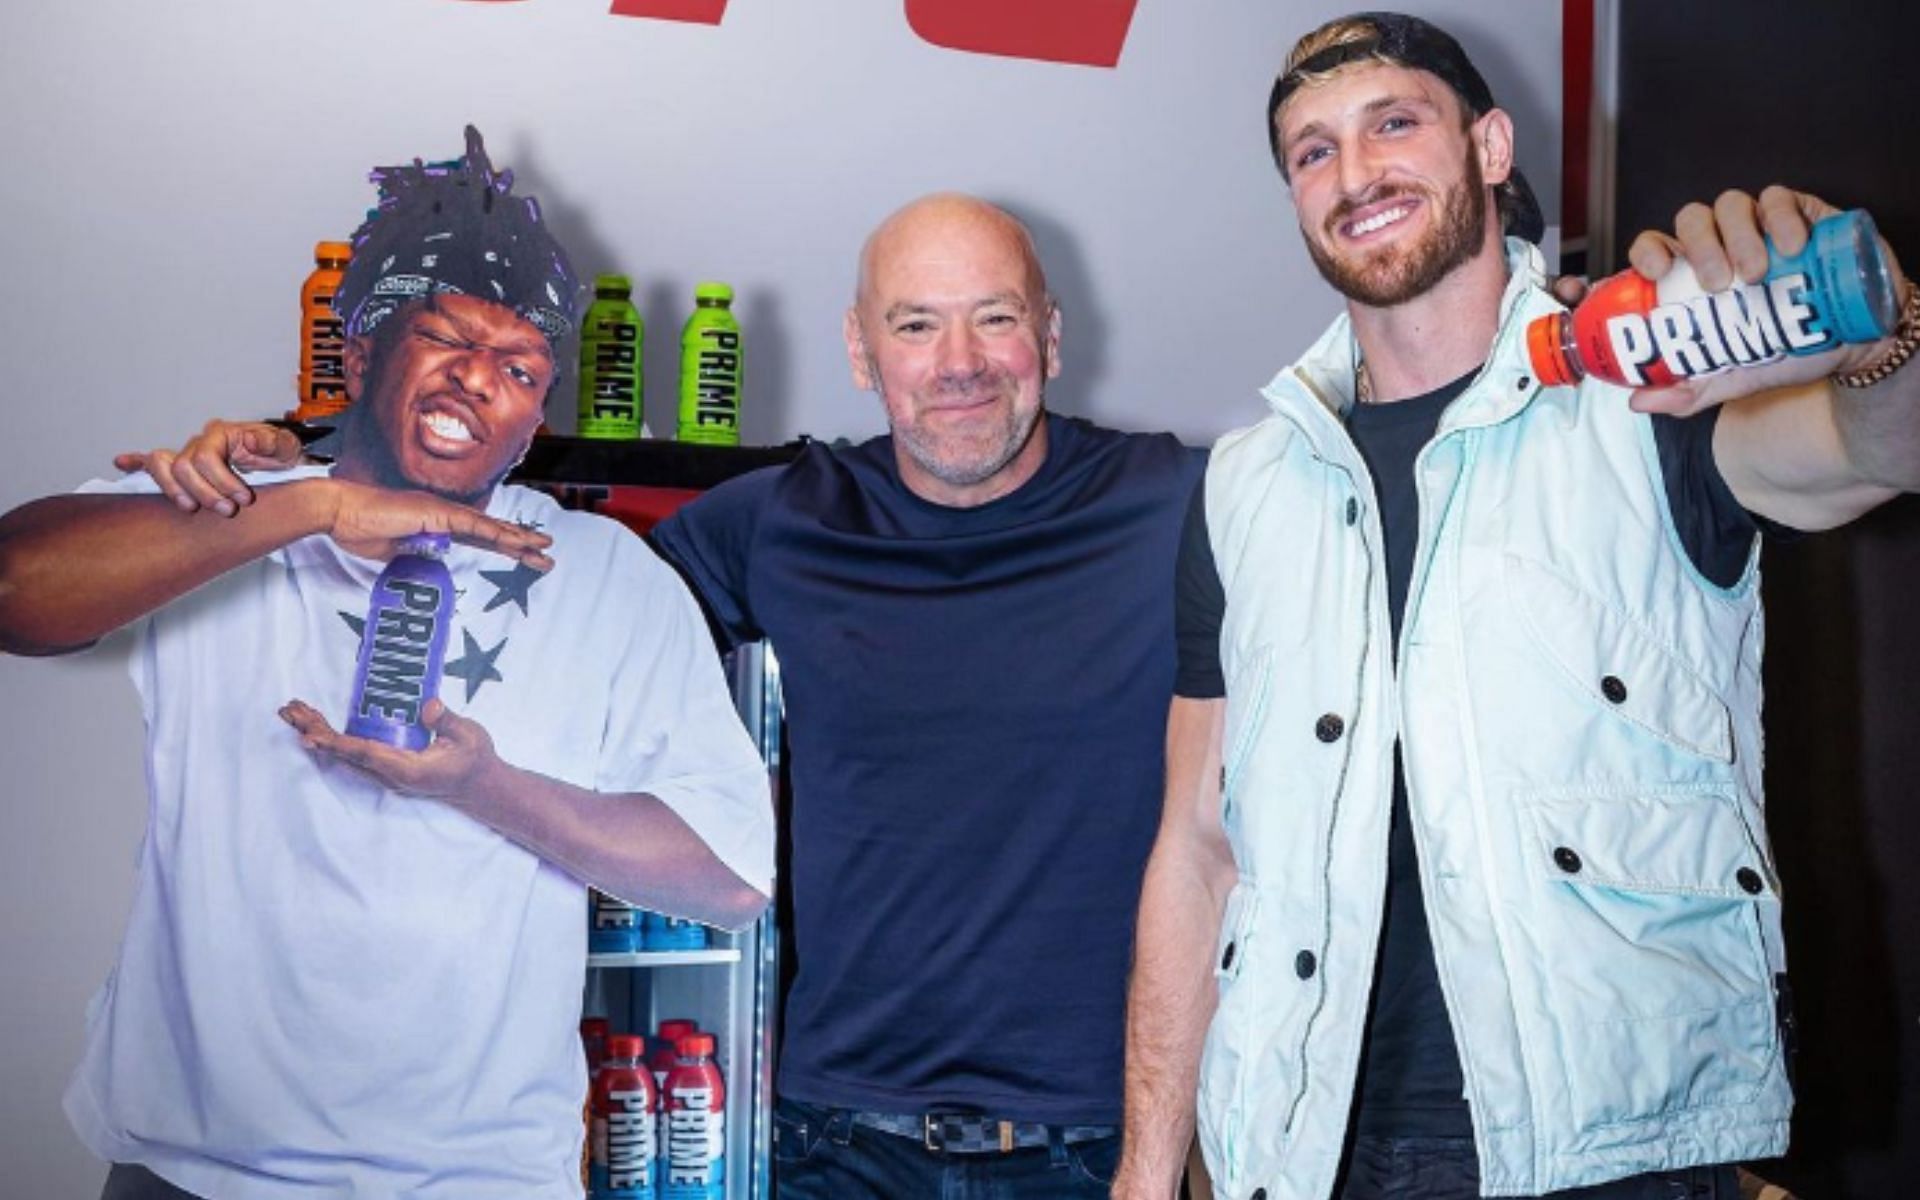 Prime Hydration's 'Ice Pop' Celebrates UK Launch, Creates Fake Twitter  Argument Between Logan Paul And KSI